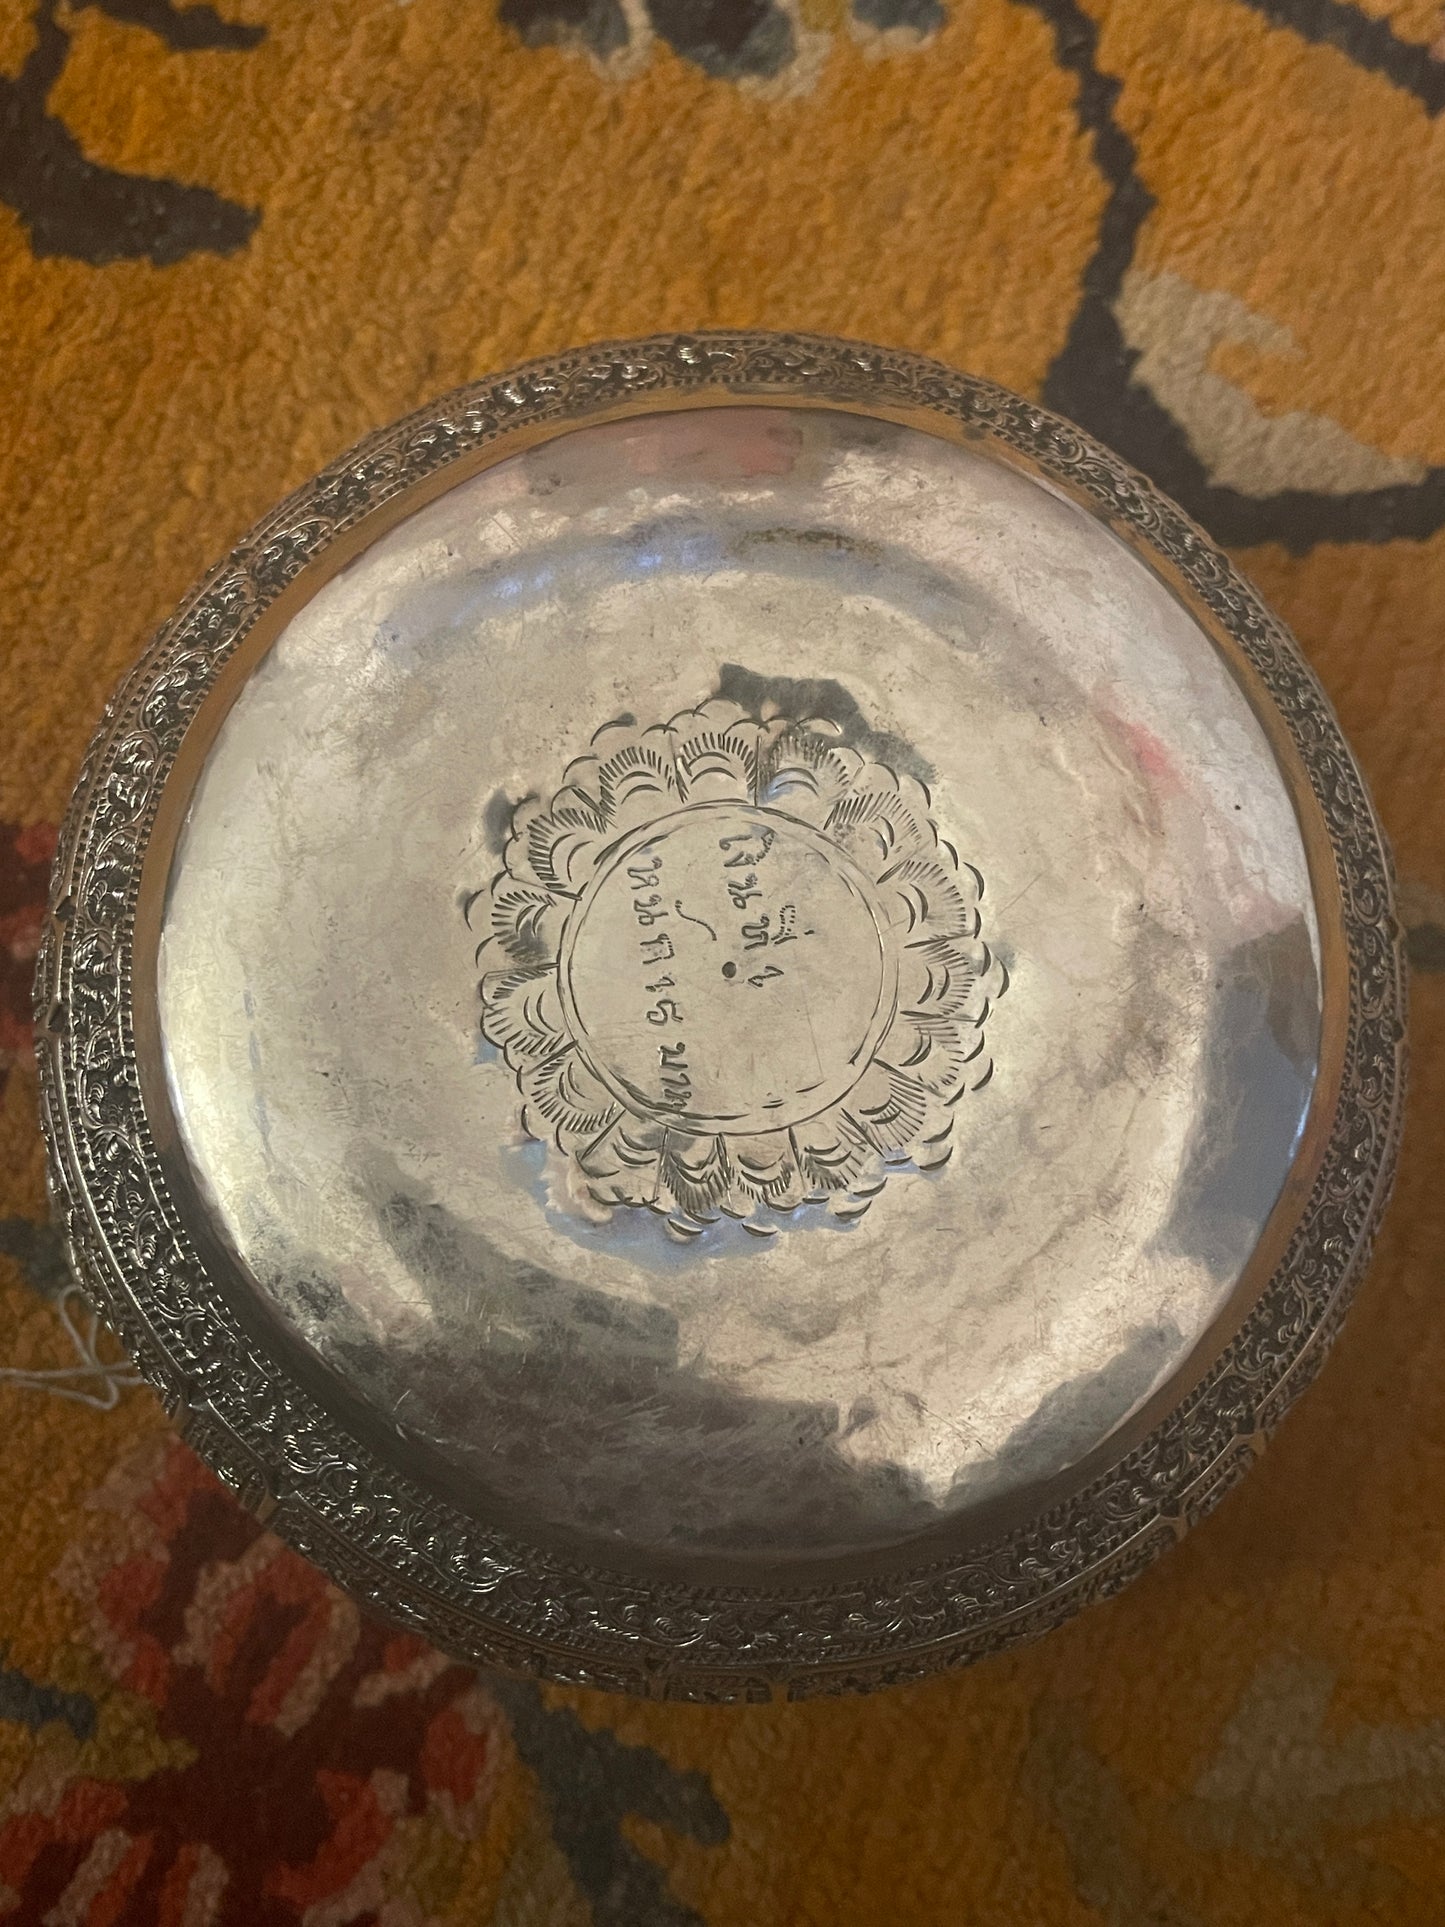 An antique south East Asian silver repousse bowl